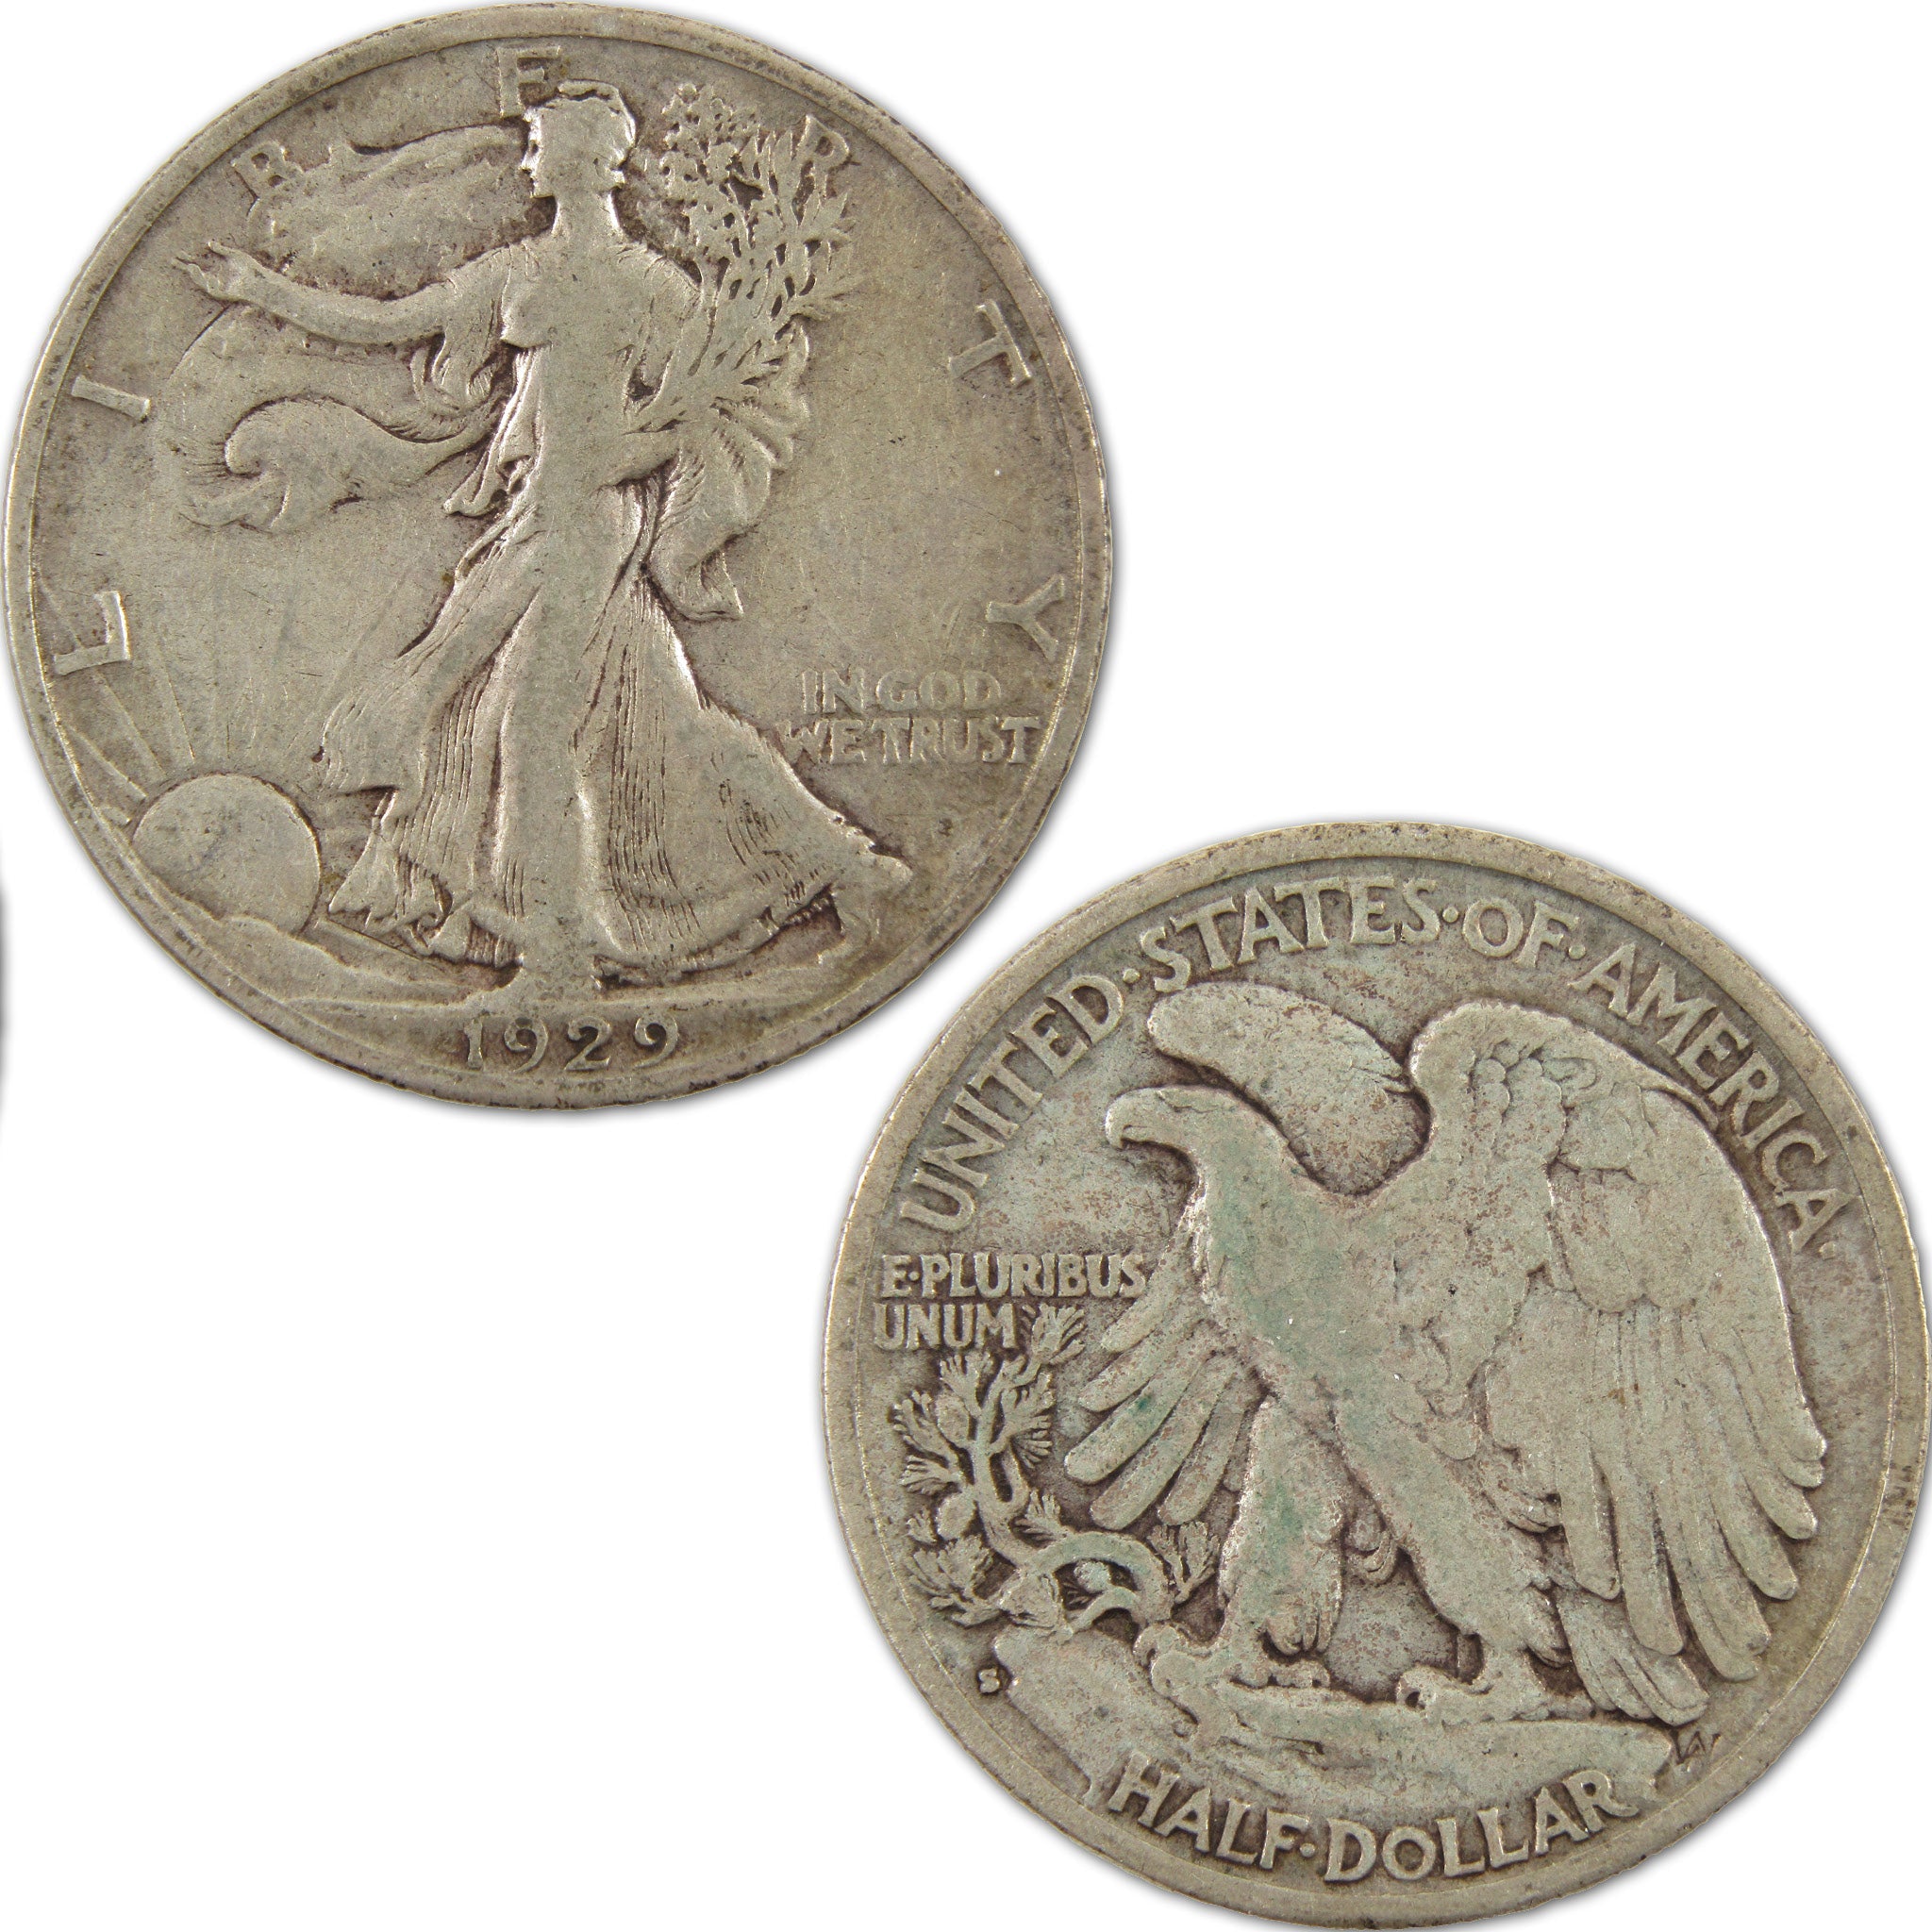 1929 S Liberty Walking Half Dollar VF Very Fine Silver 50c SKU:I10409